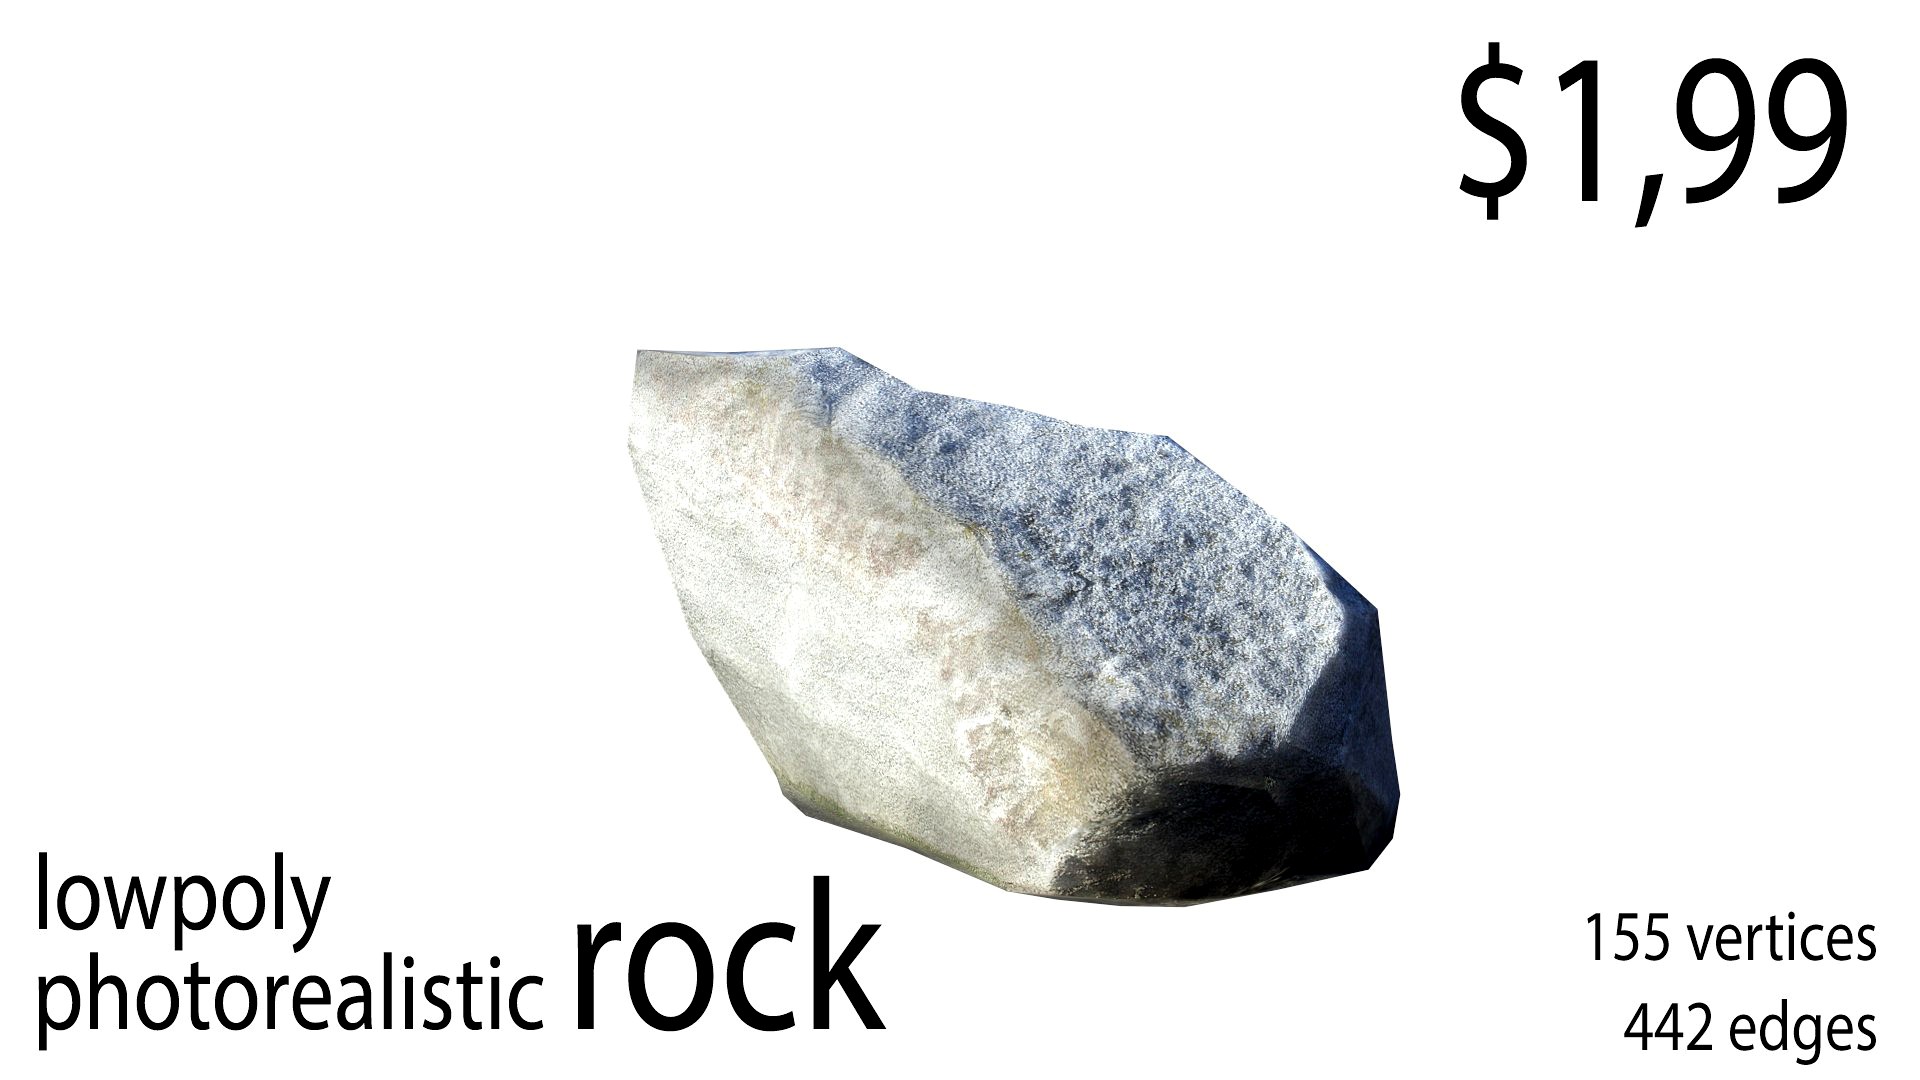 Lowpoly photorealistic Rock